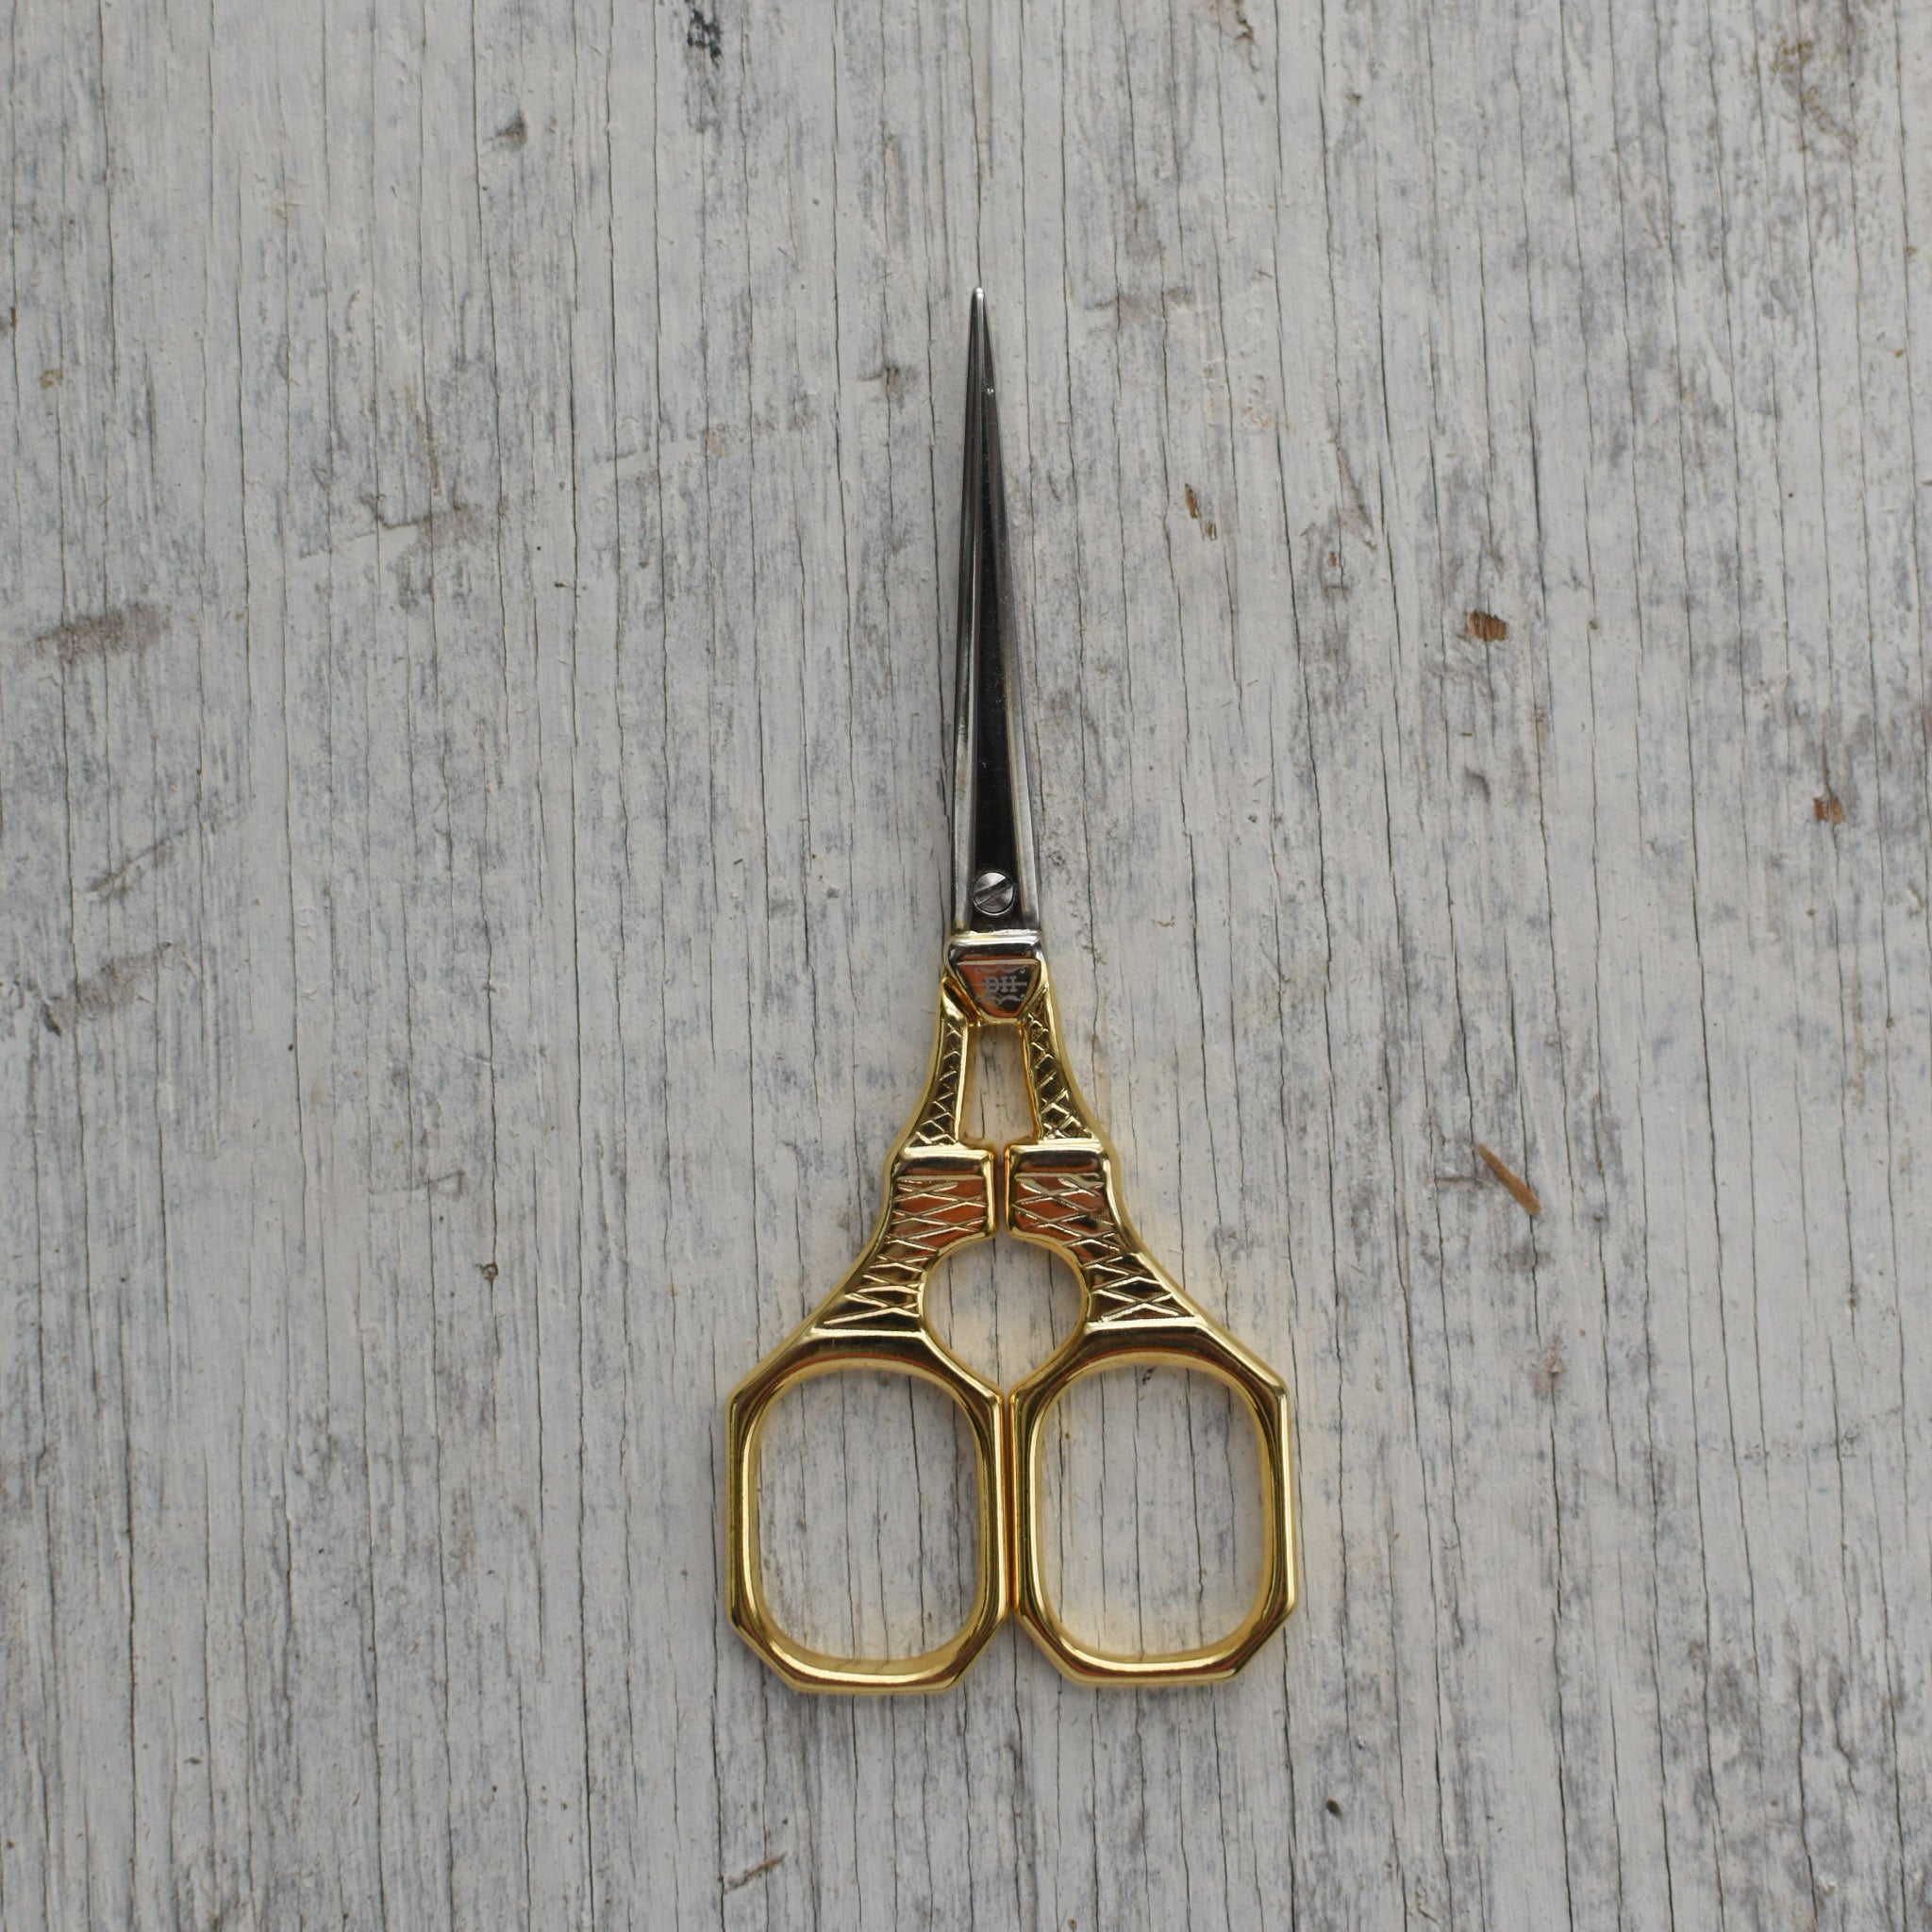 Sewing Scissors Castellana Style